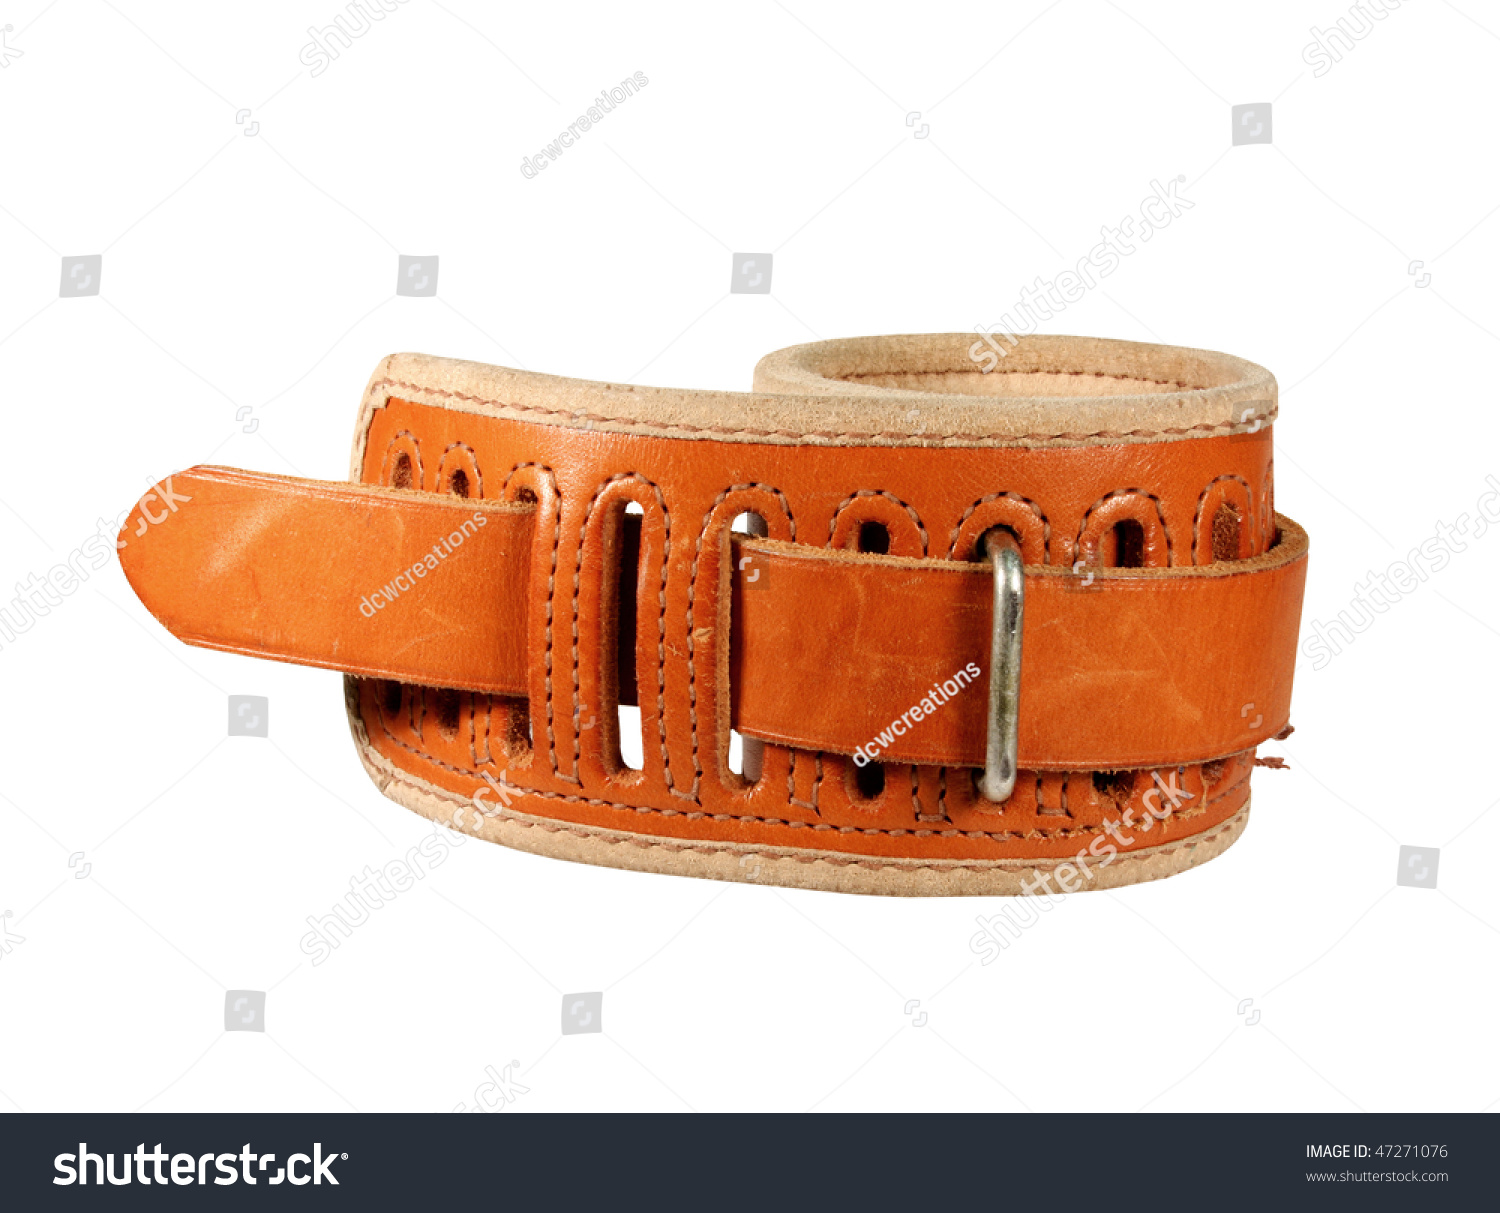 1,332 Leather restraints Images, Stock Photos & Vectors | Shutterstock